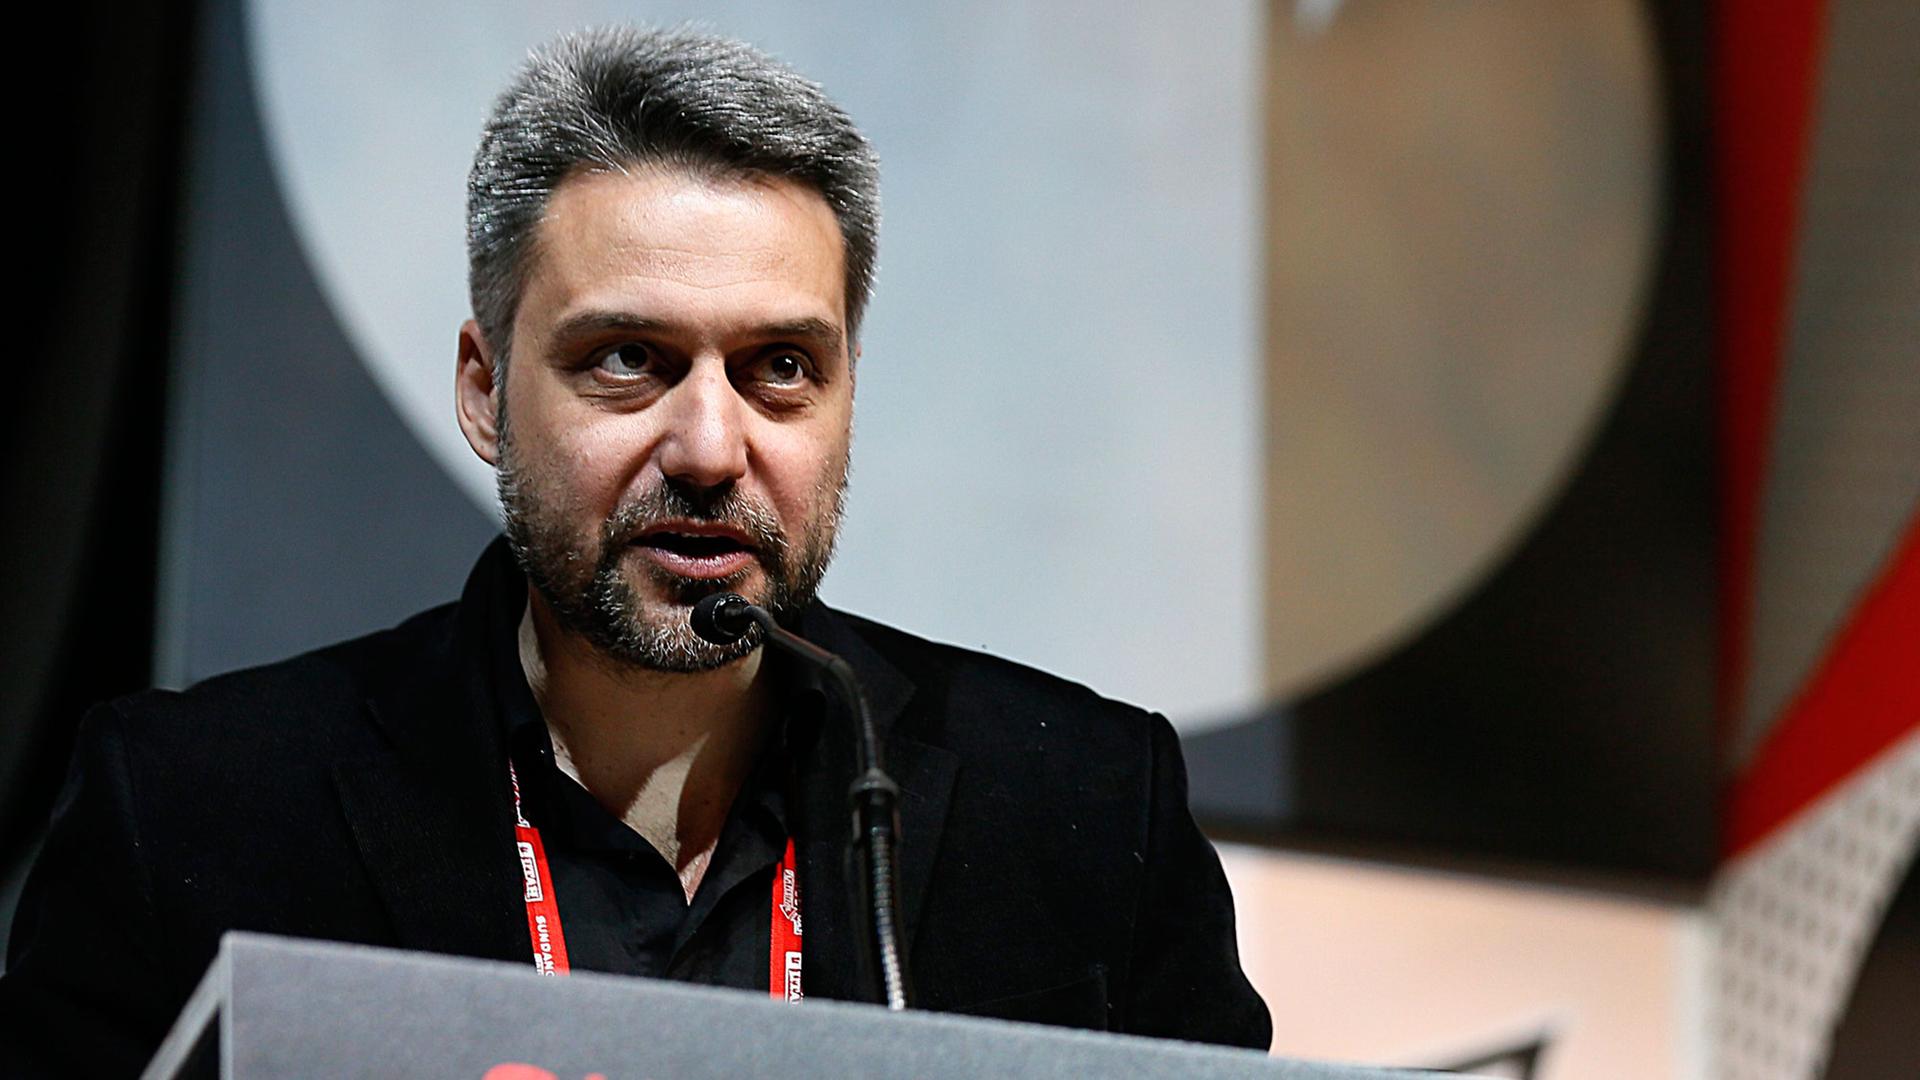 Der Belgrader Regisseur Srdan Golubovic auf dem Sundance Festival 2013